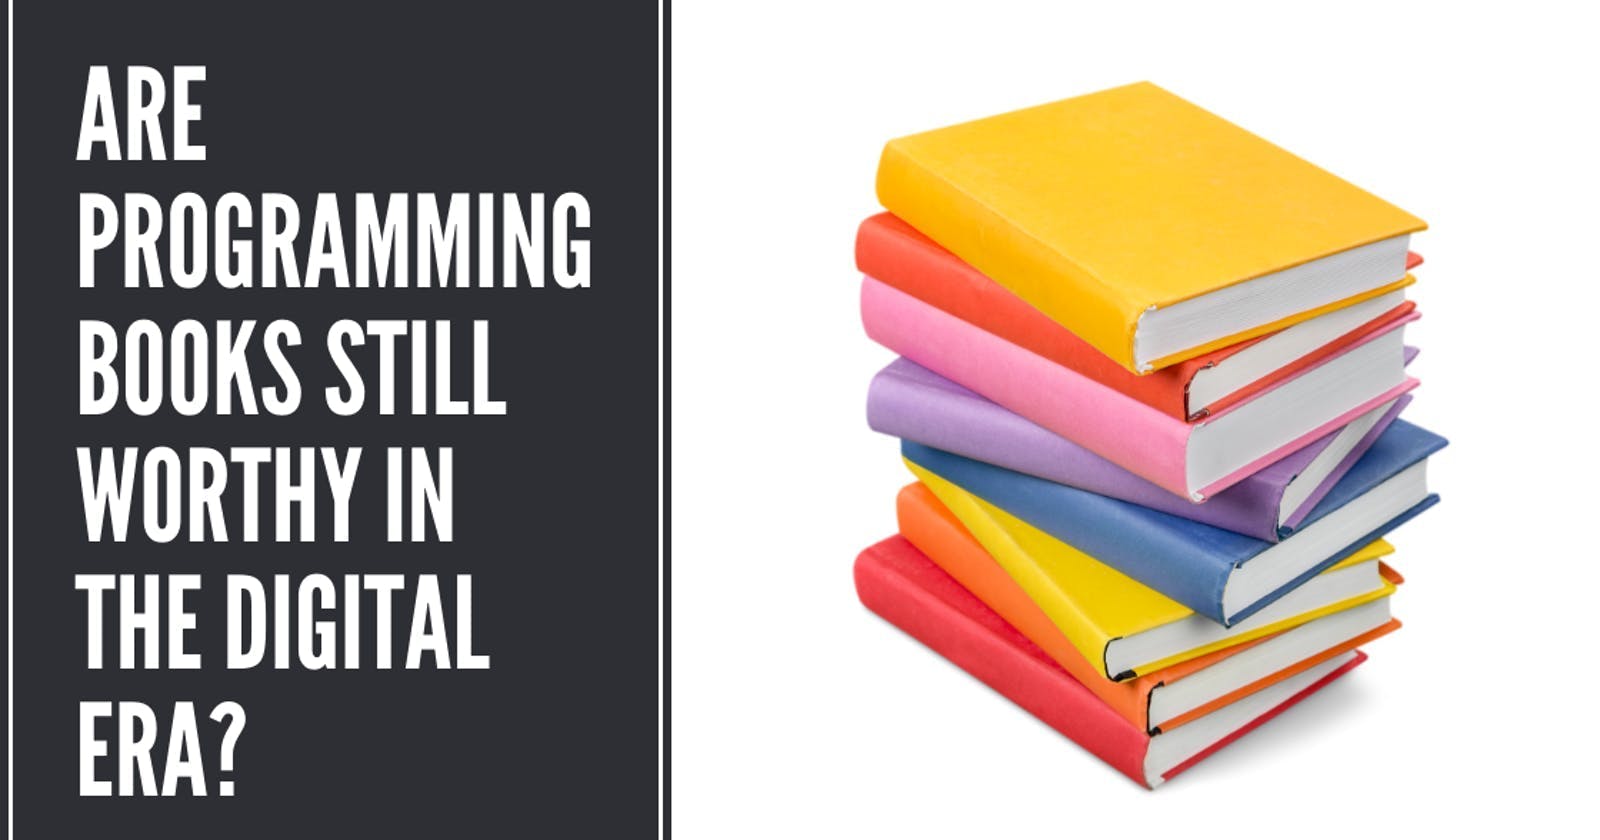 Are programming books still worthy in the digital era?